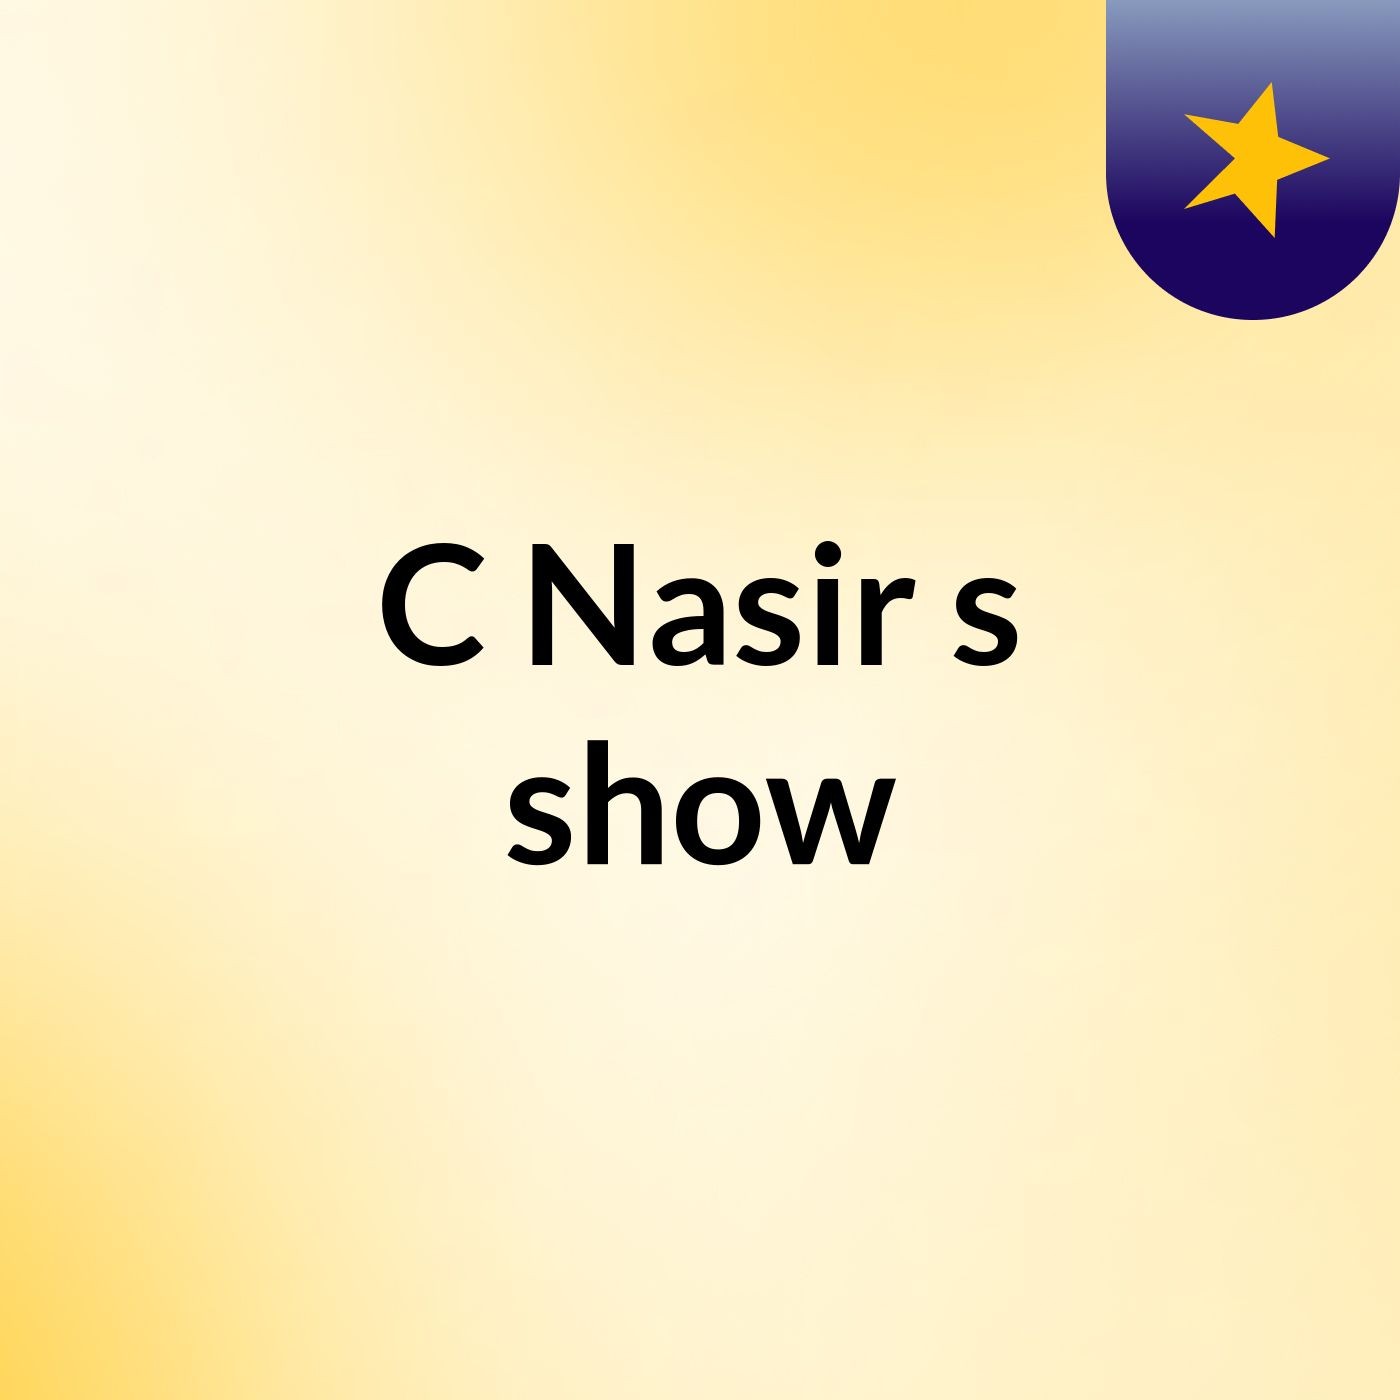 C Nasir's show